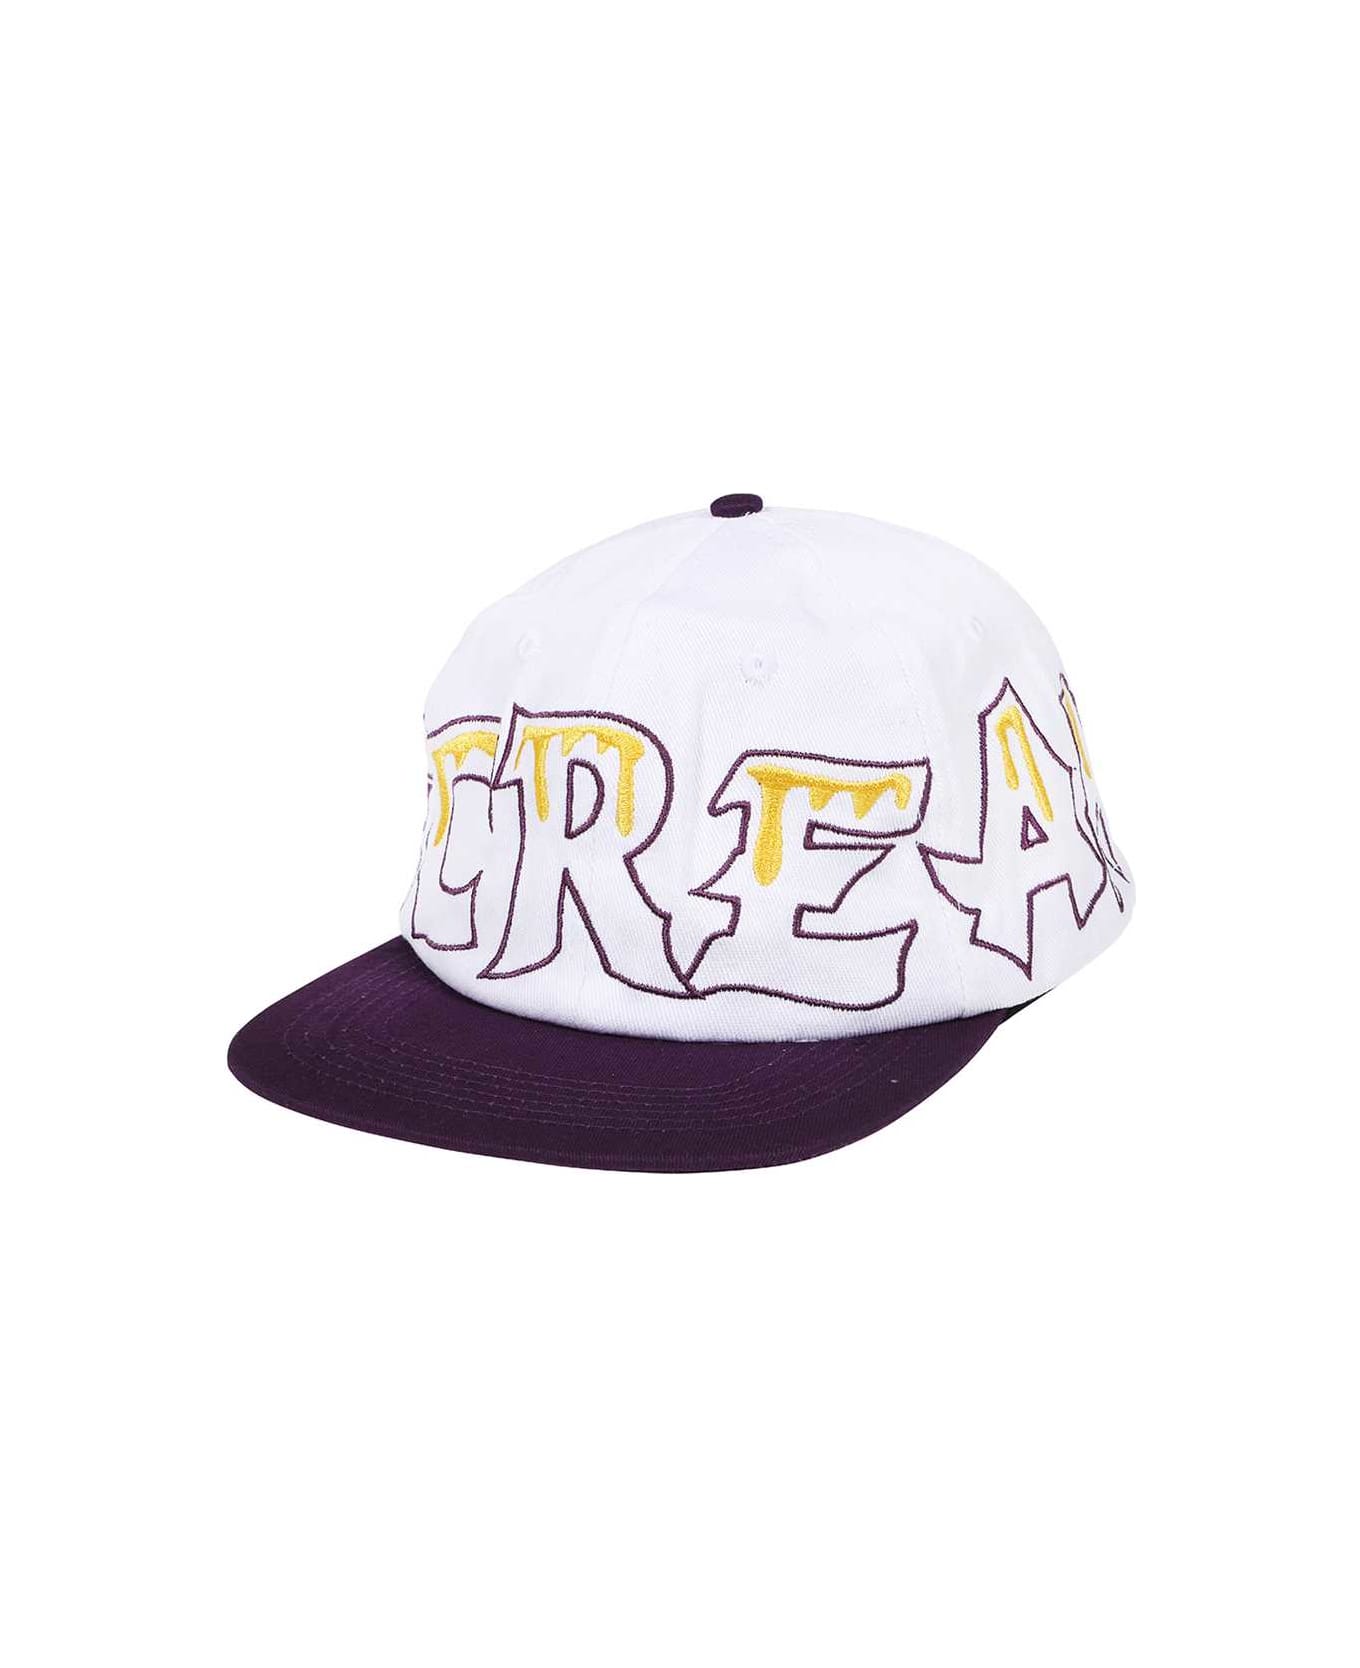 Icecream Baseball Hat With Flat Visor - White 帽子